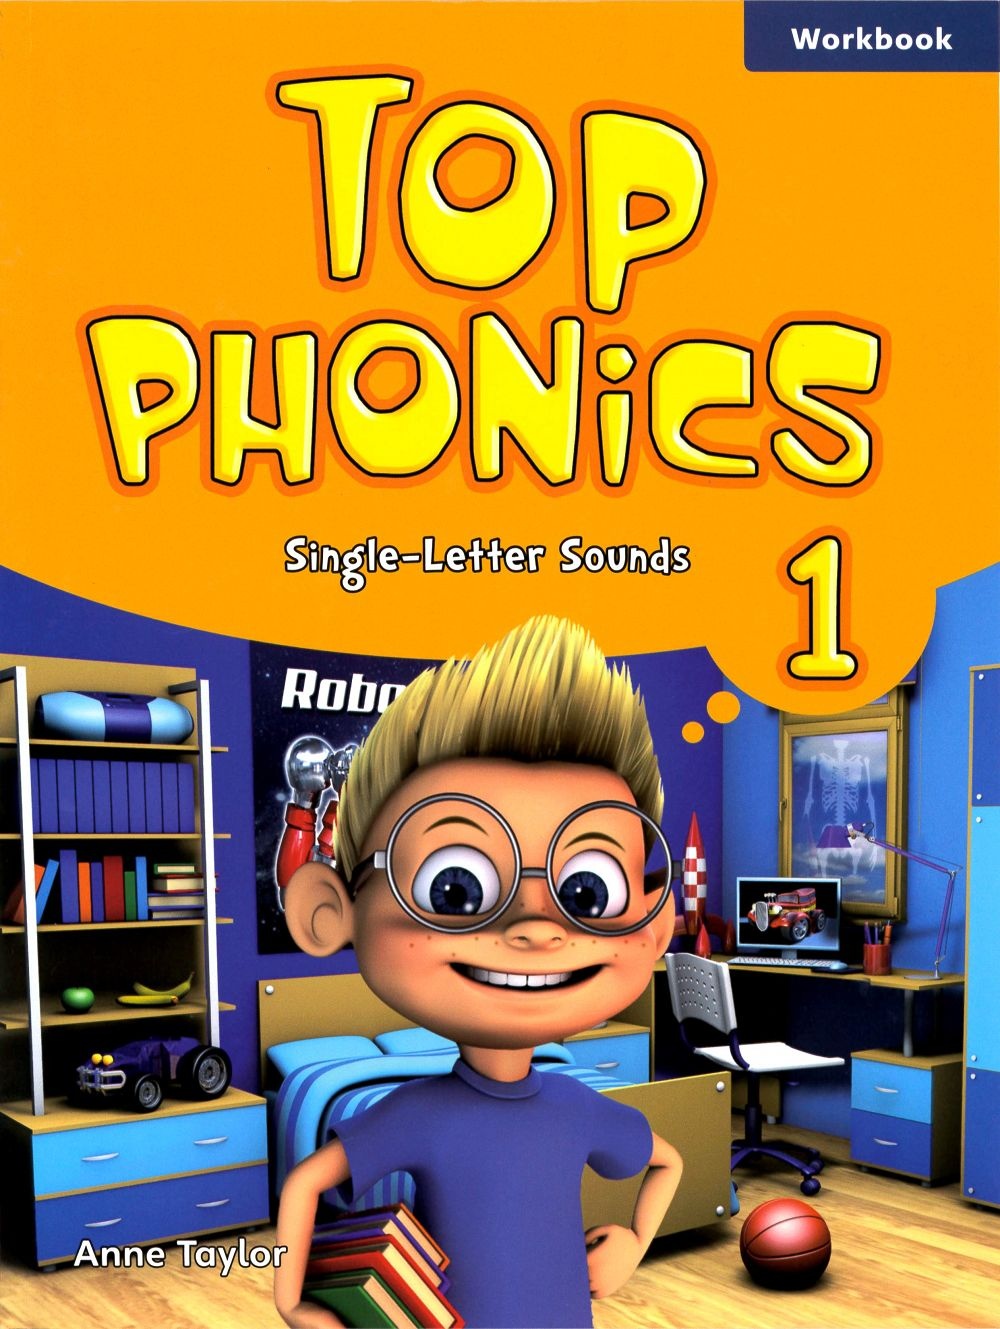 Top Phonics (1) Workbook